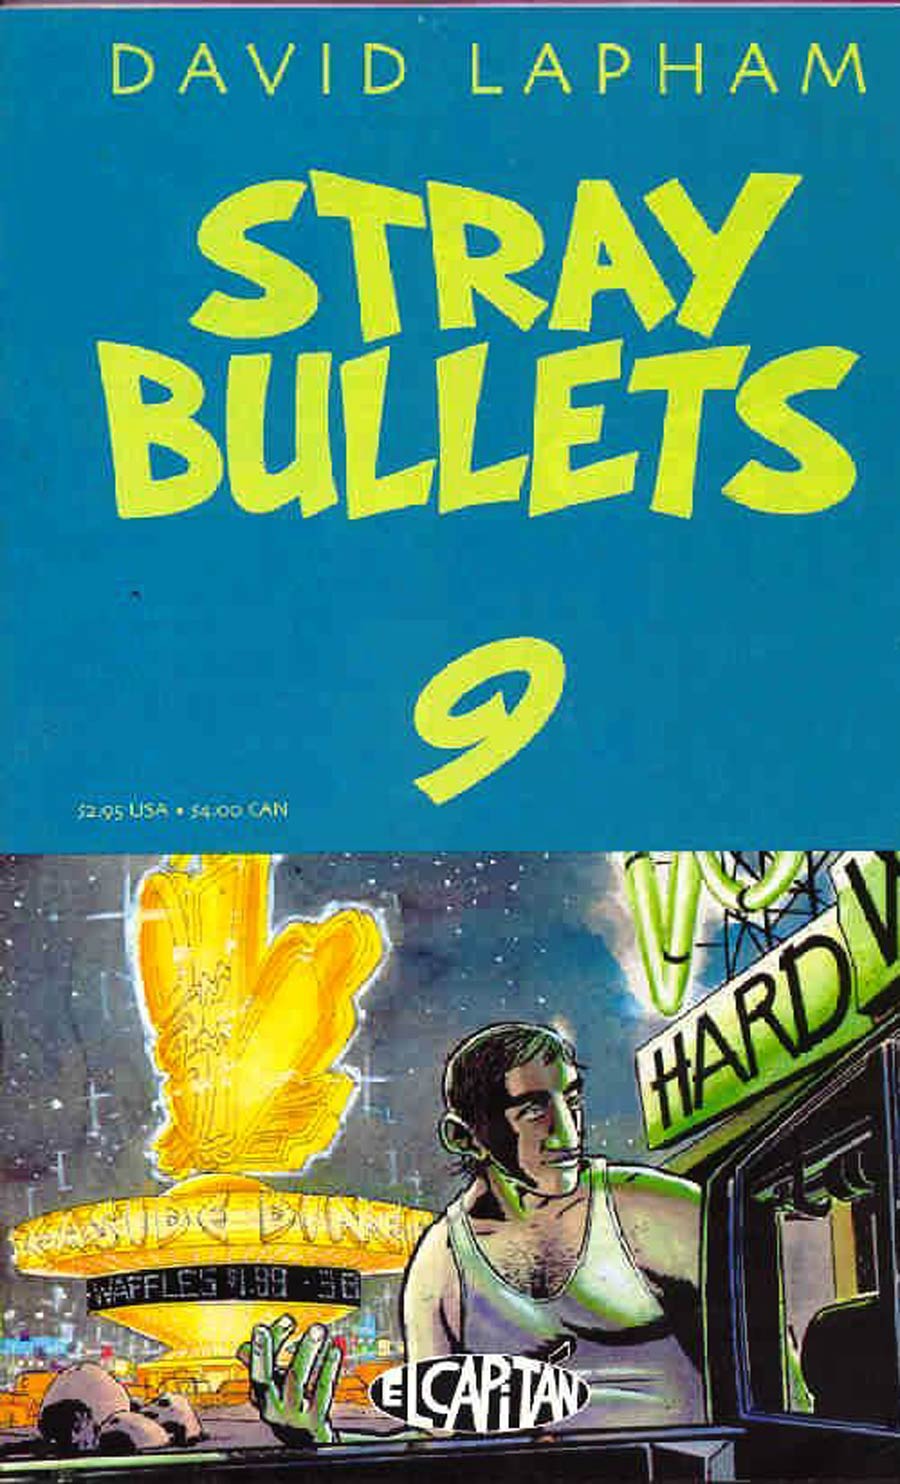 Stray Bullets #9